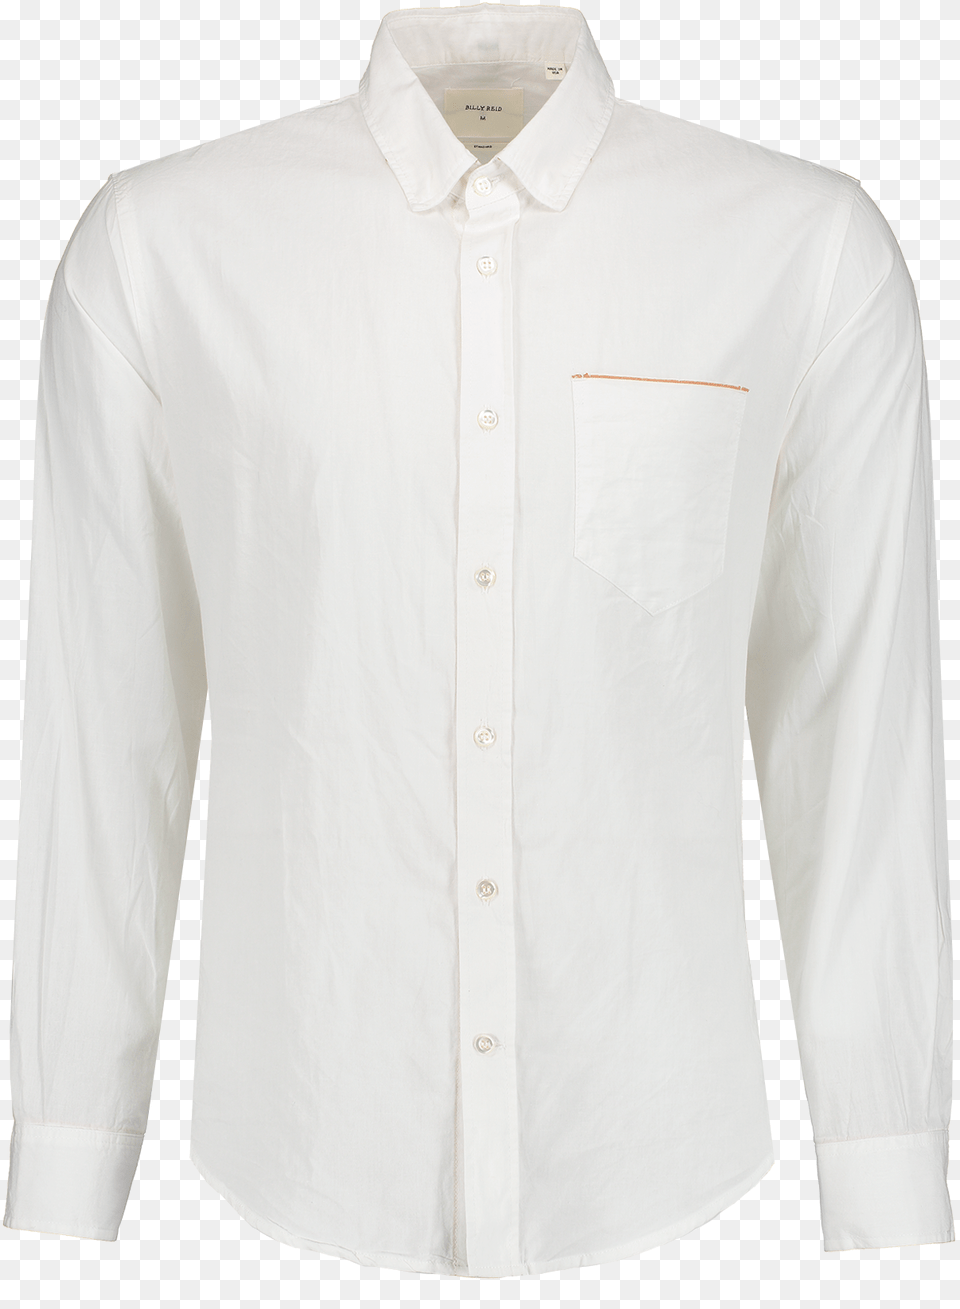 Long Sleeve 1 Pocket Shirt White Mens White Shirt Long Sleeve, Clothing, Dress Shirt, Long Sleeve, Home Decor Free Transparent Png